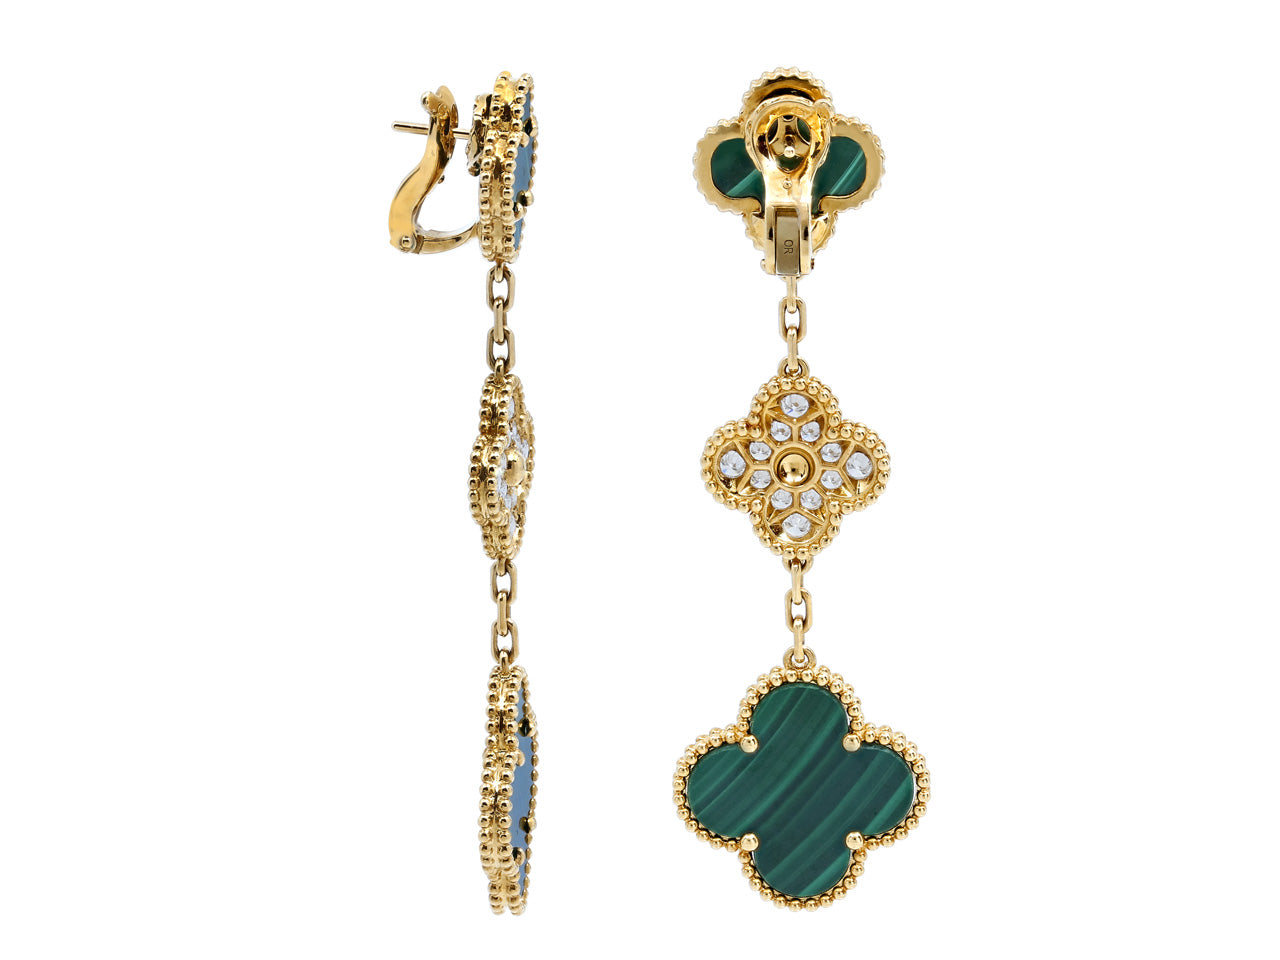 Van Cleef & Arpels 'Magic Alhambra' Malachite and Diamond Earrings in 18K Gold